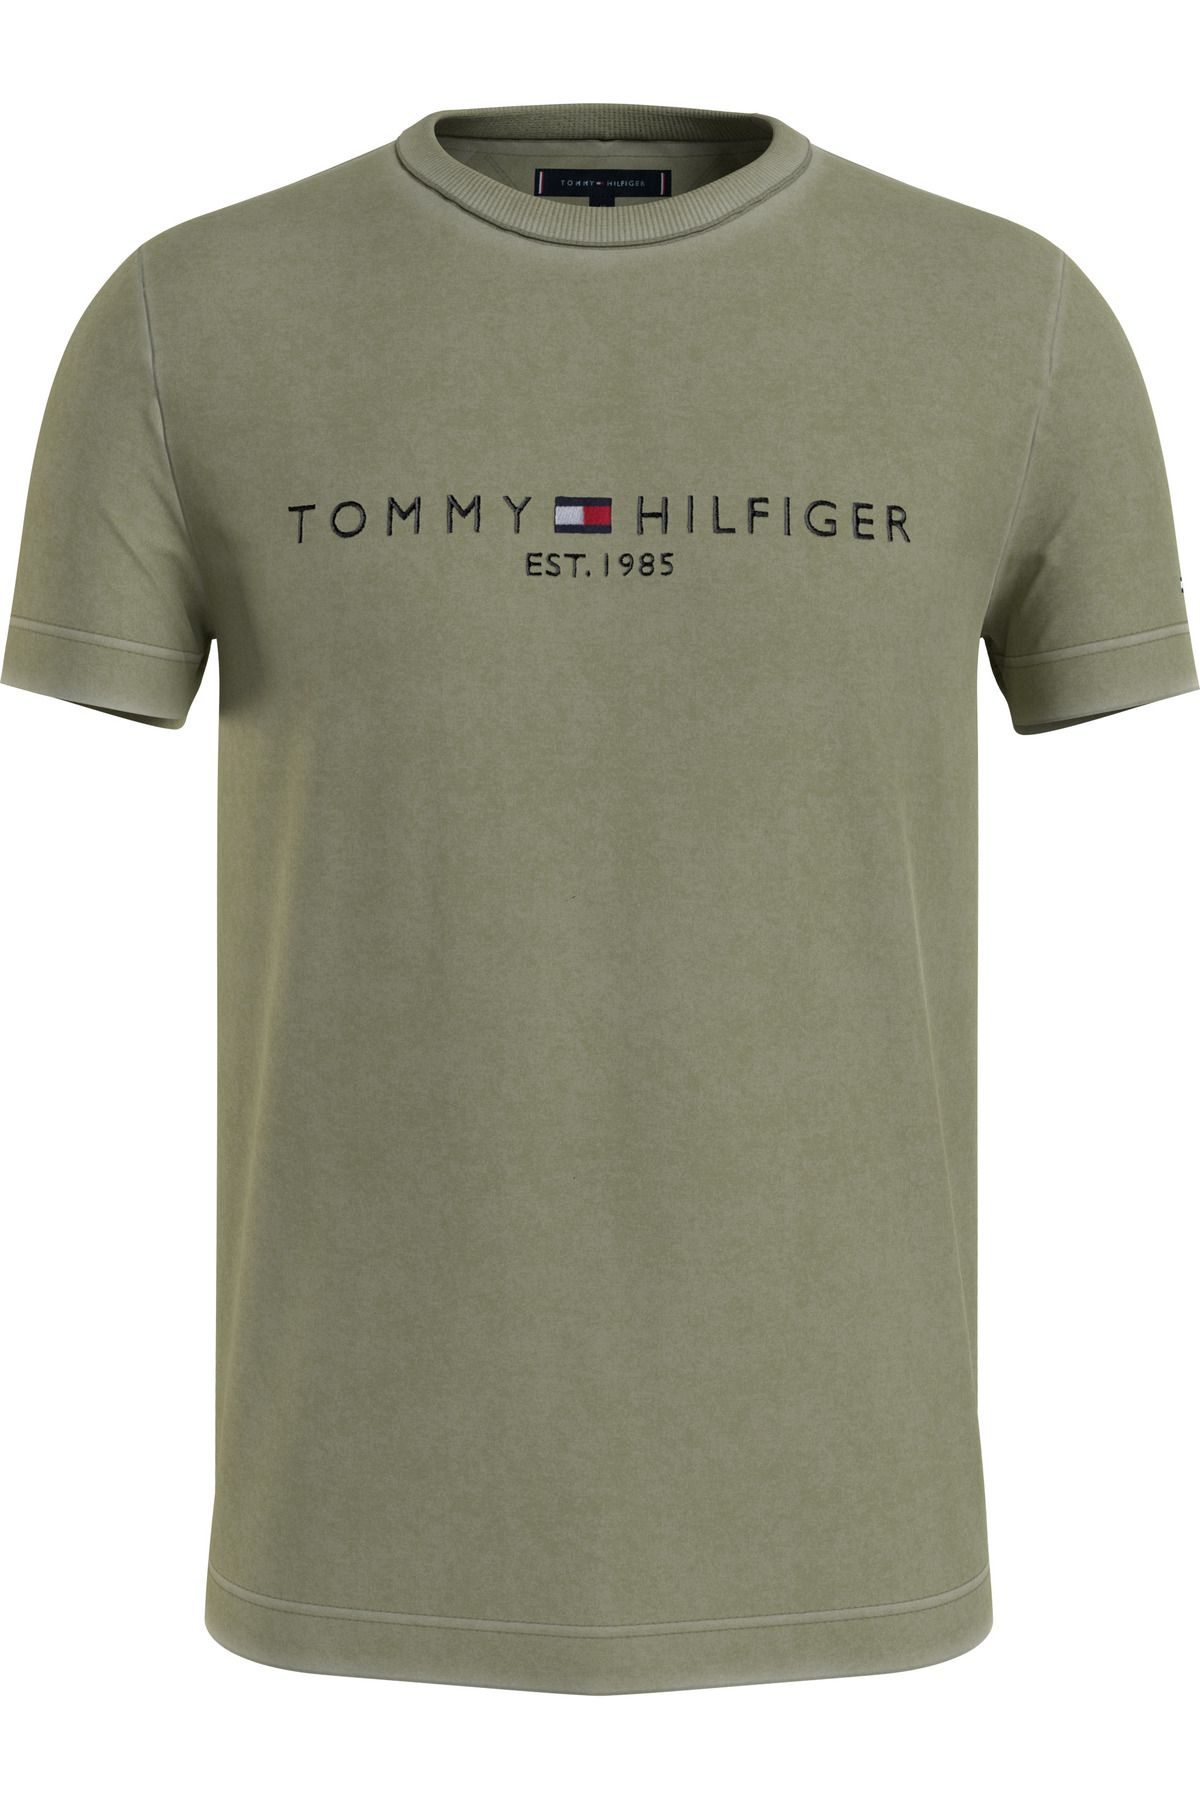 Tommy Hilfiger Erkek Marka Logolu Pamuklu Bisiklet Yakalı Yeşil1 T-Shirt MW0MW35186-L9F